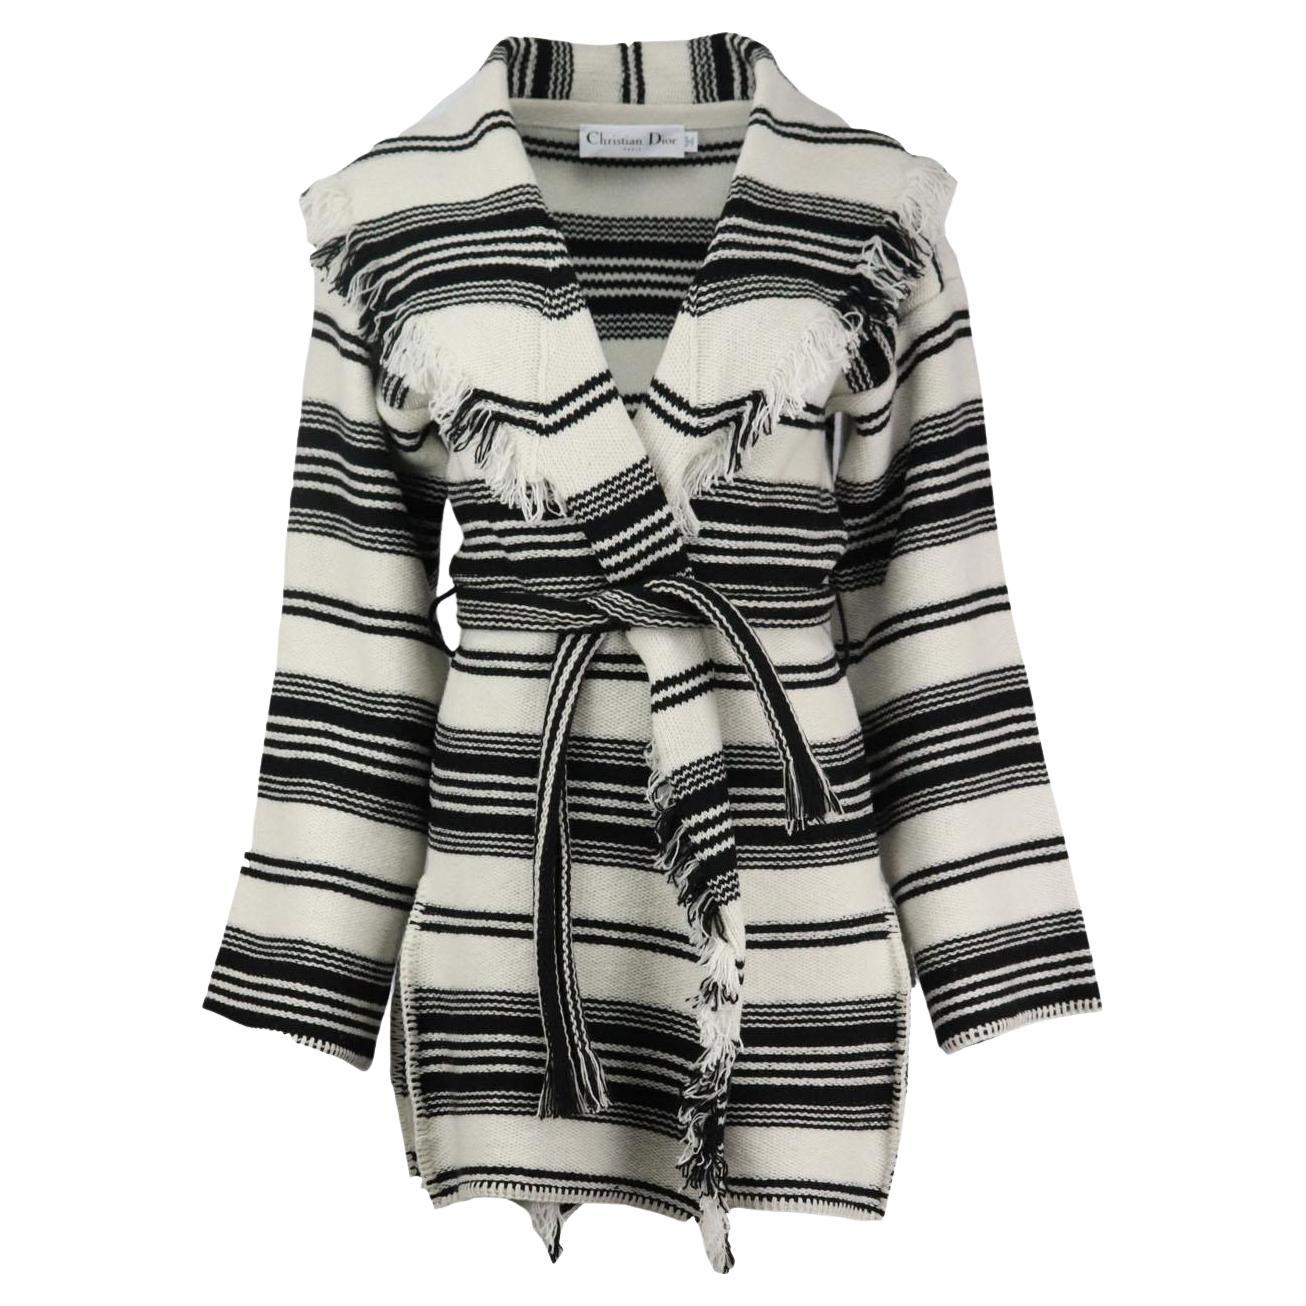 Christian Dior Belted Fringed Striped Wool Cardigan FR 40 UK 12